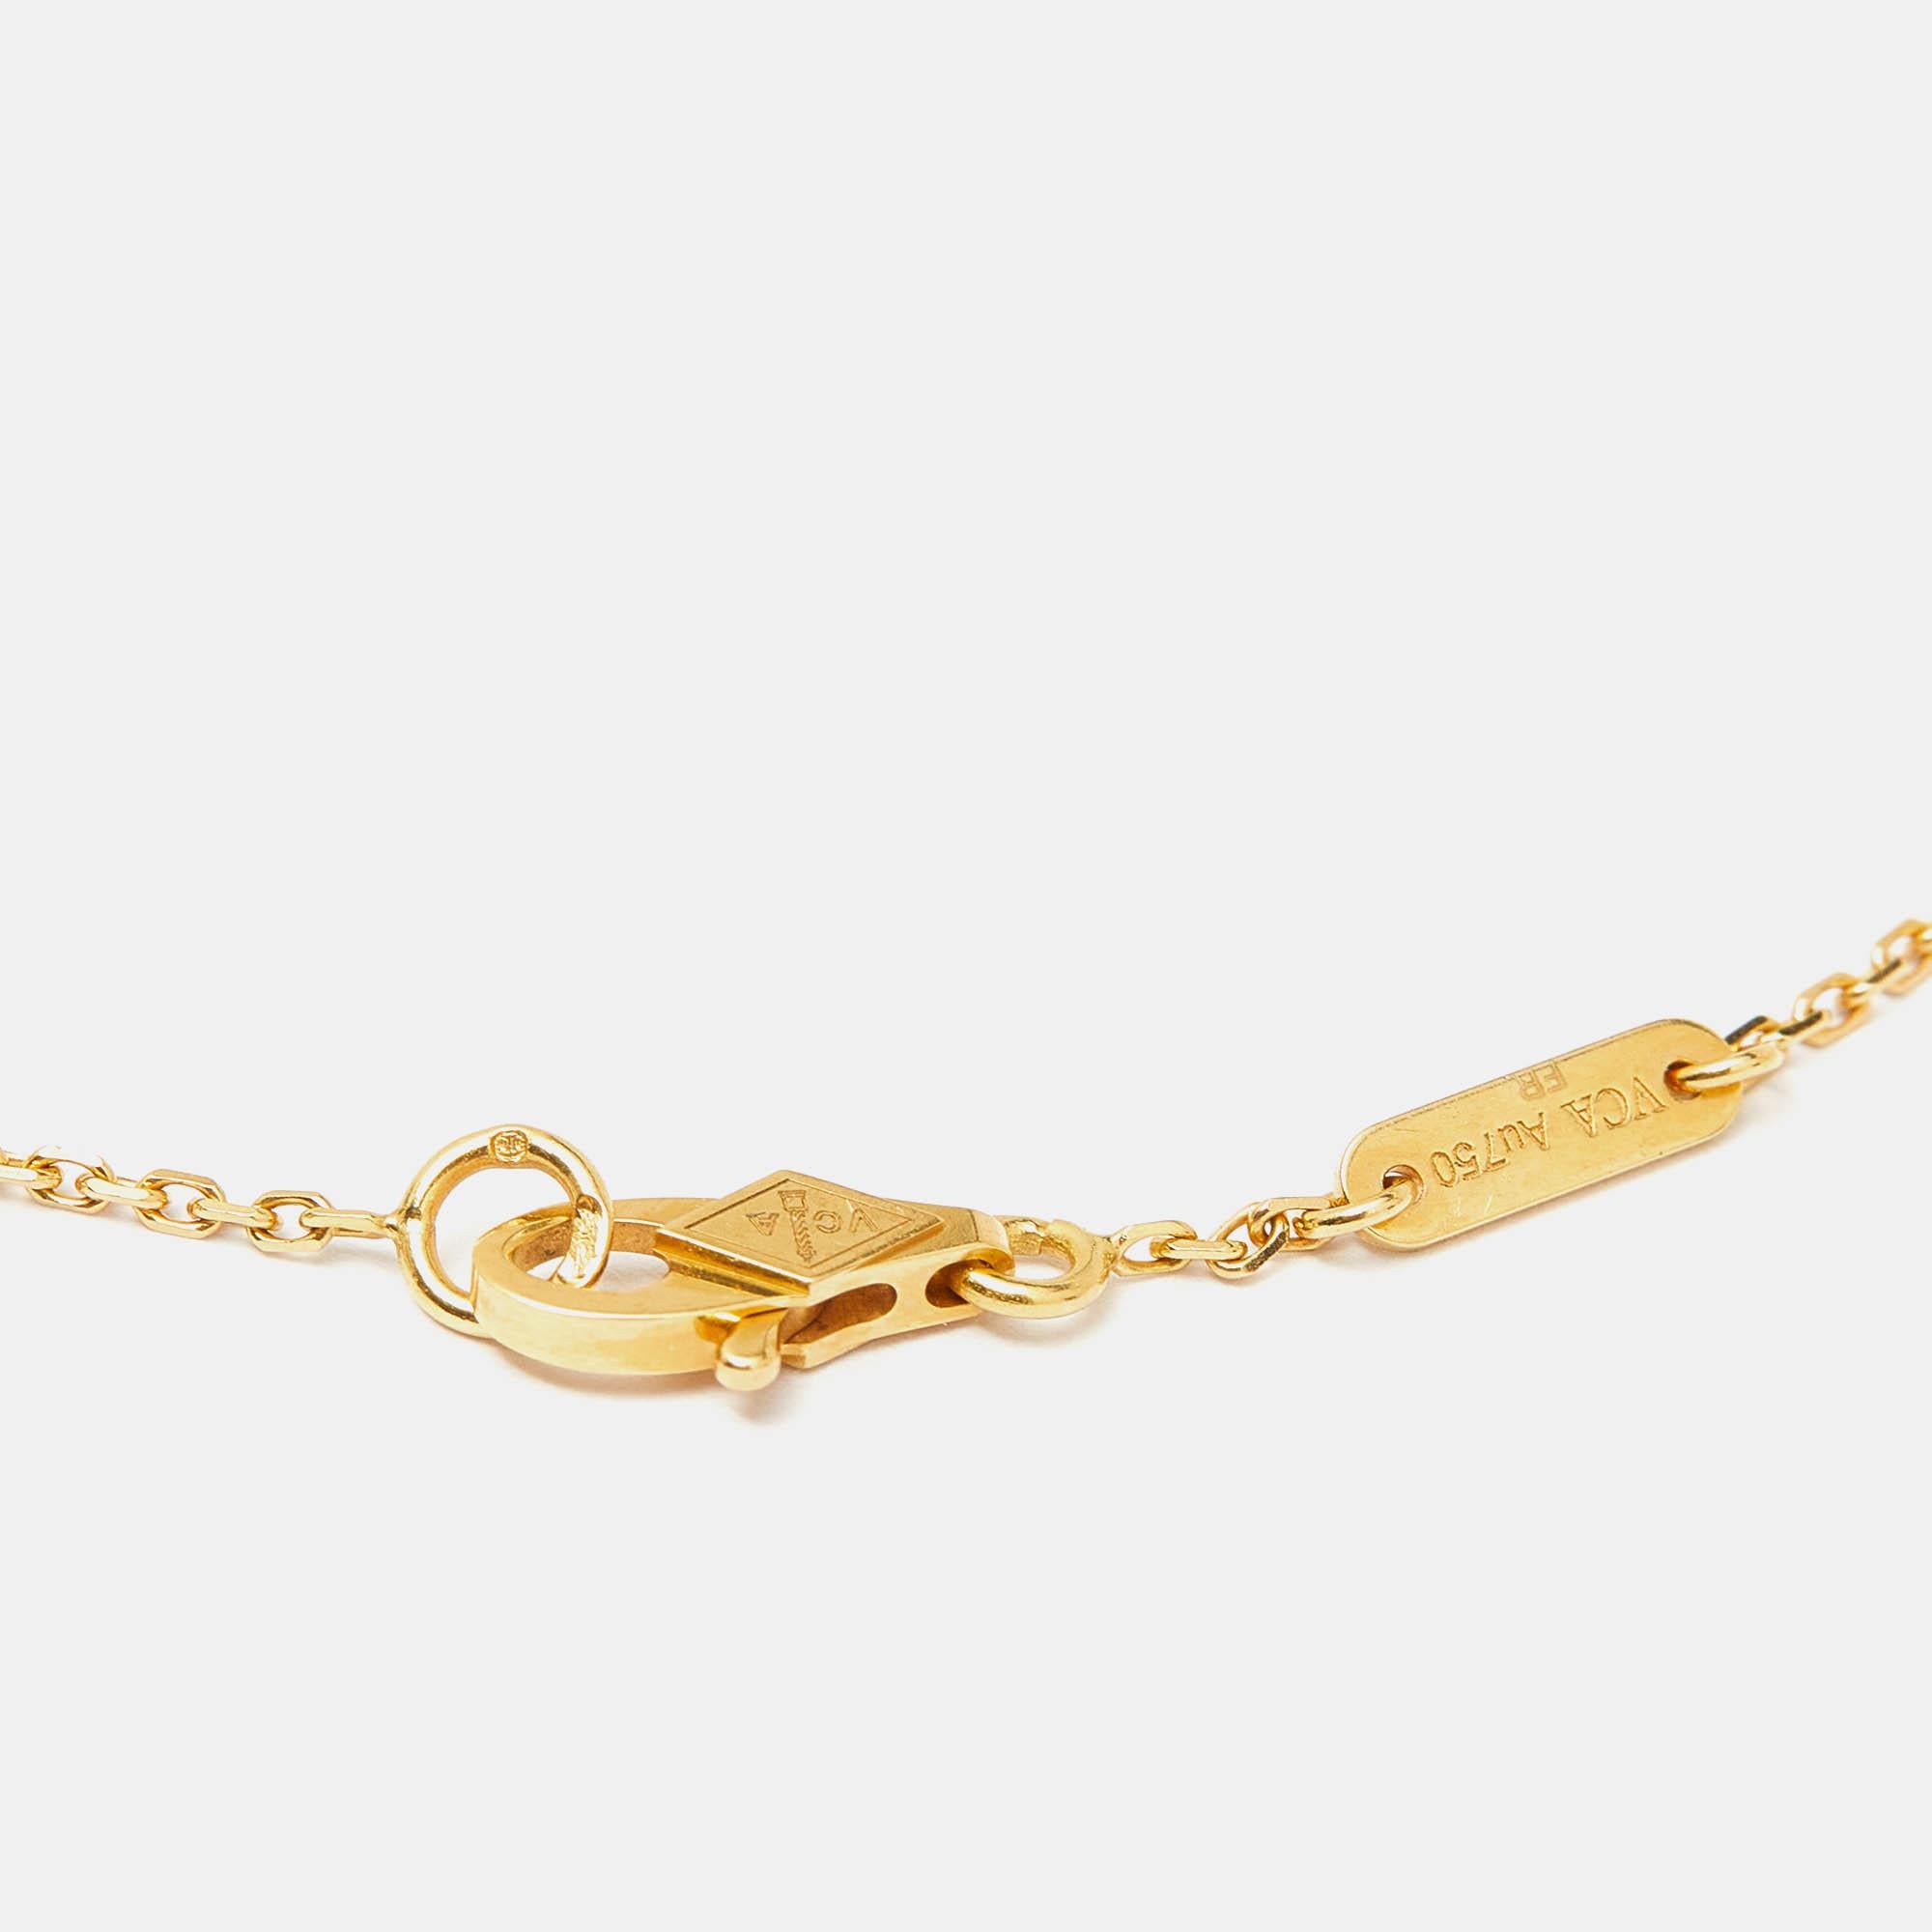  Van Cleef & Arpels Sweet Alhambra Bracelet en or jaune 18 carats et nacre Pour femmes 